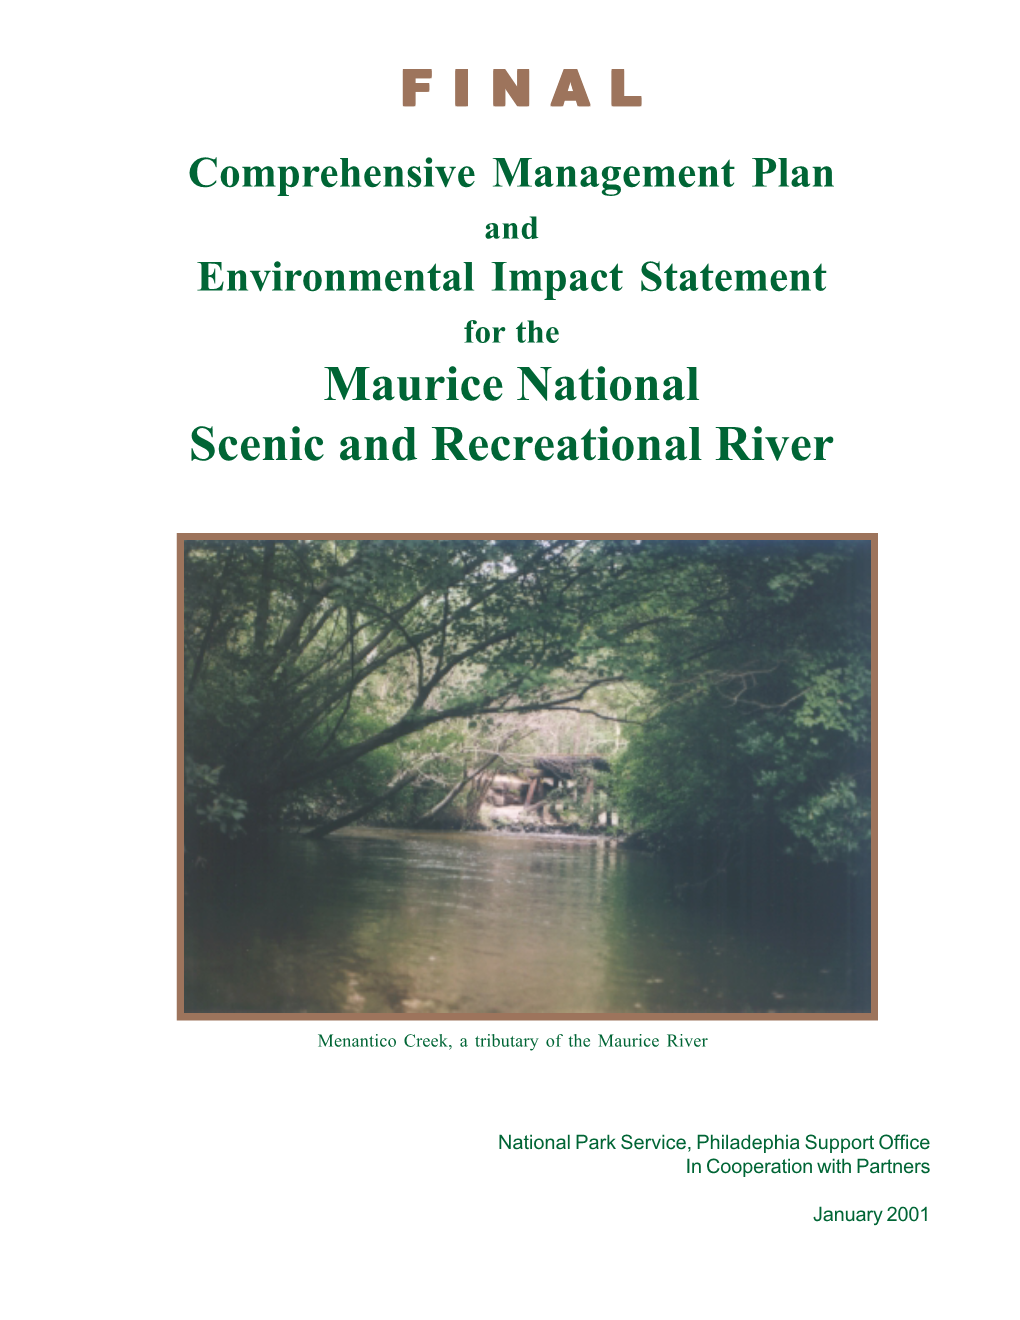 Maurice River Management Plan, New Jersey